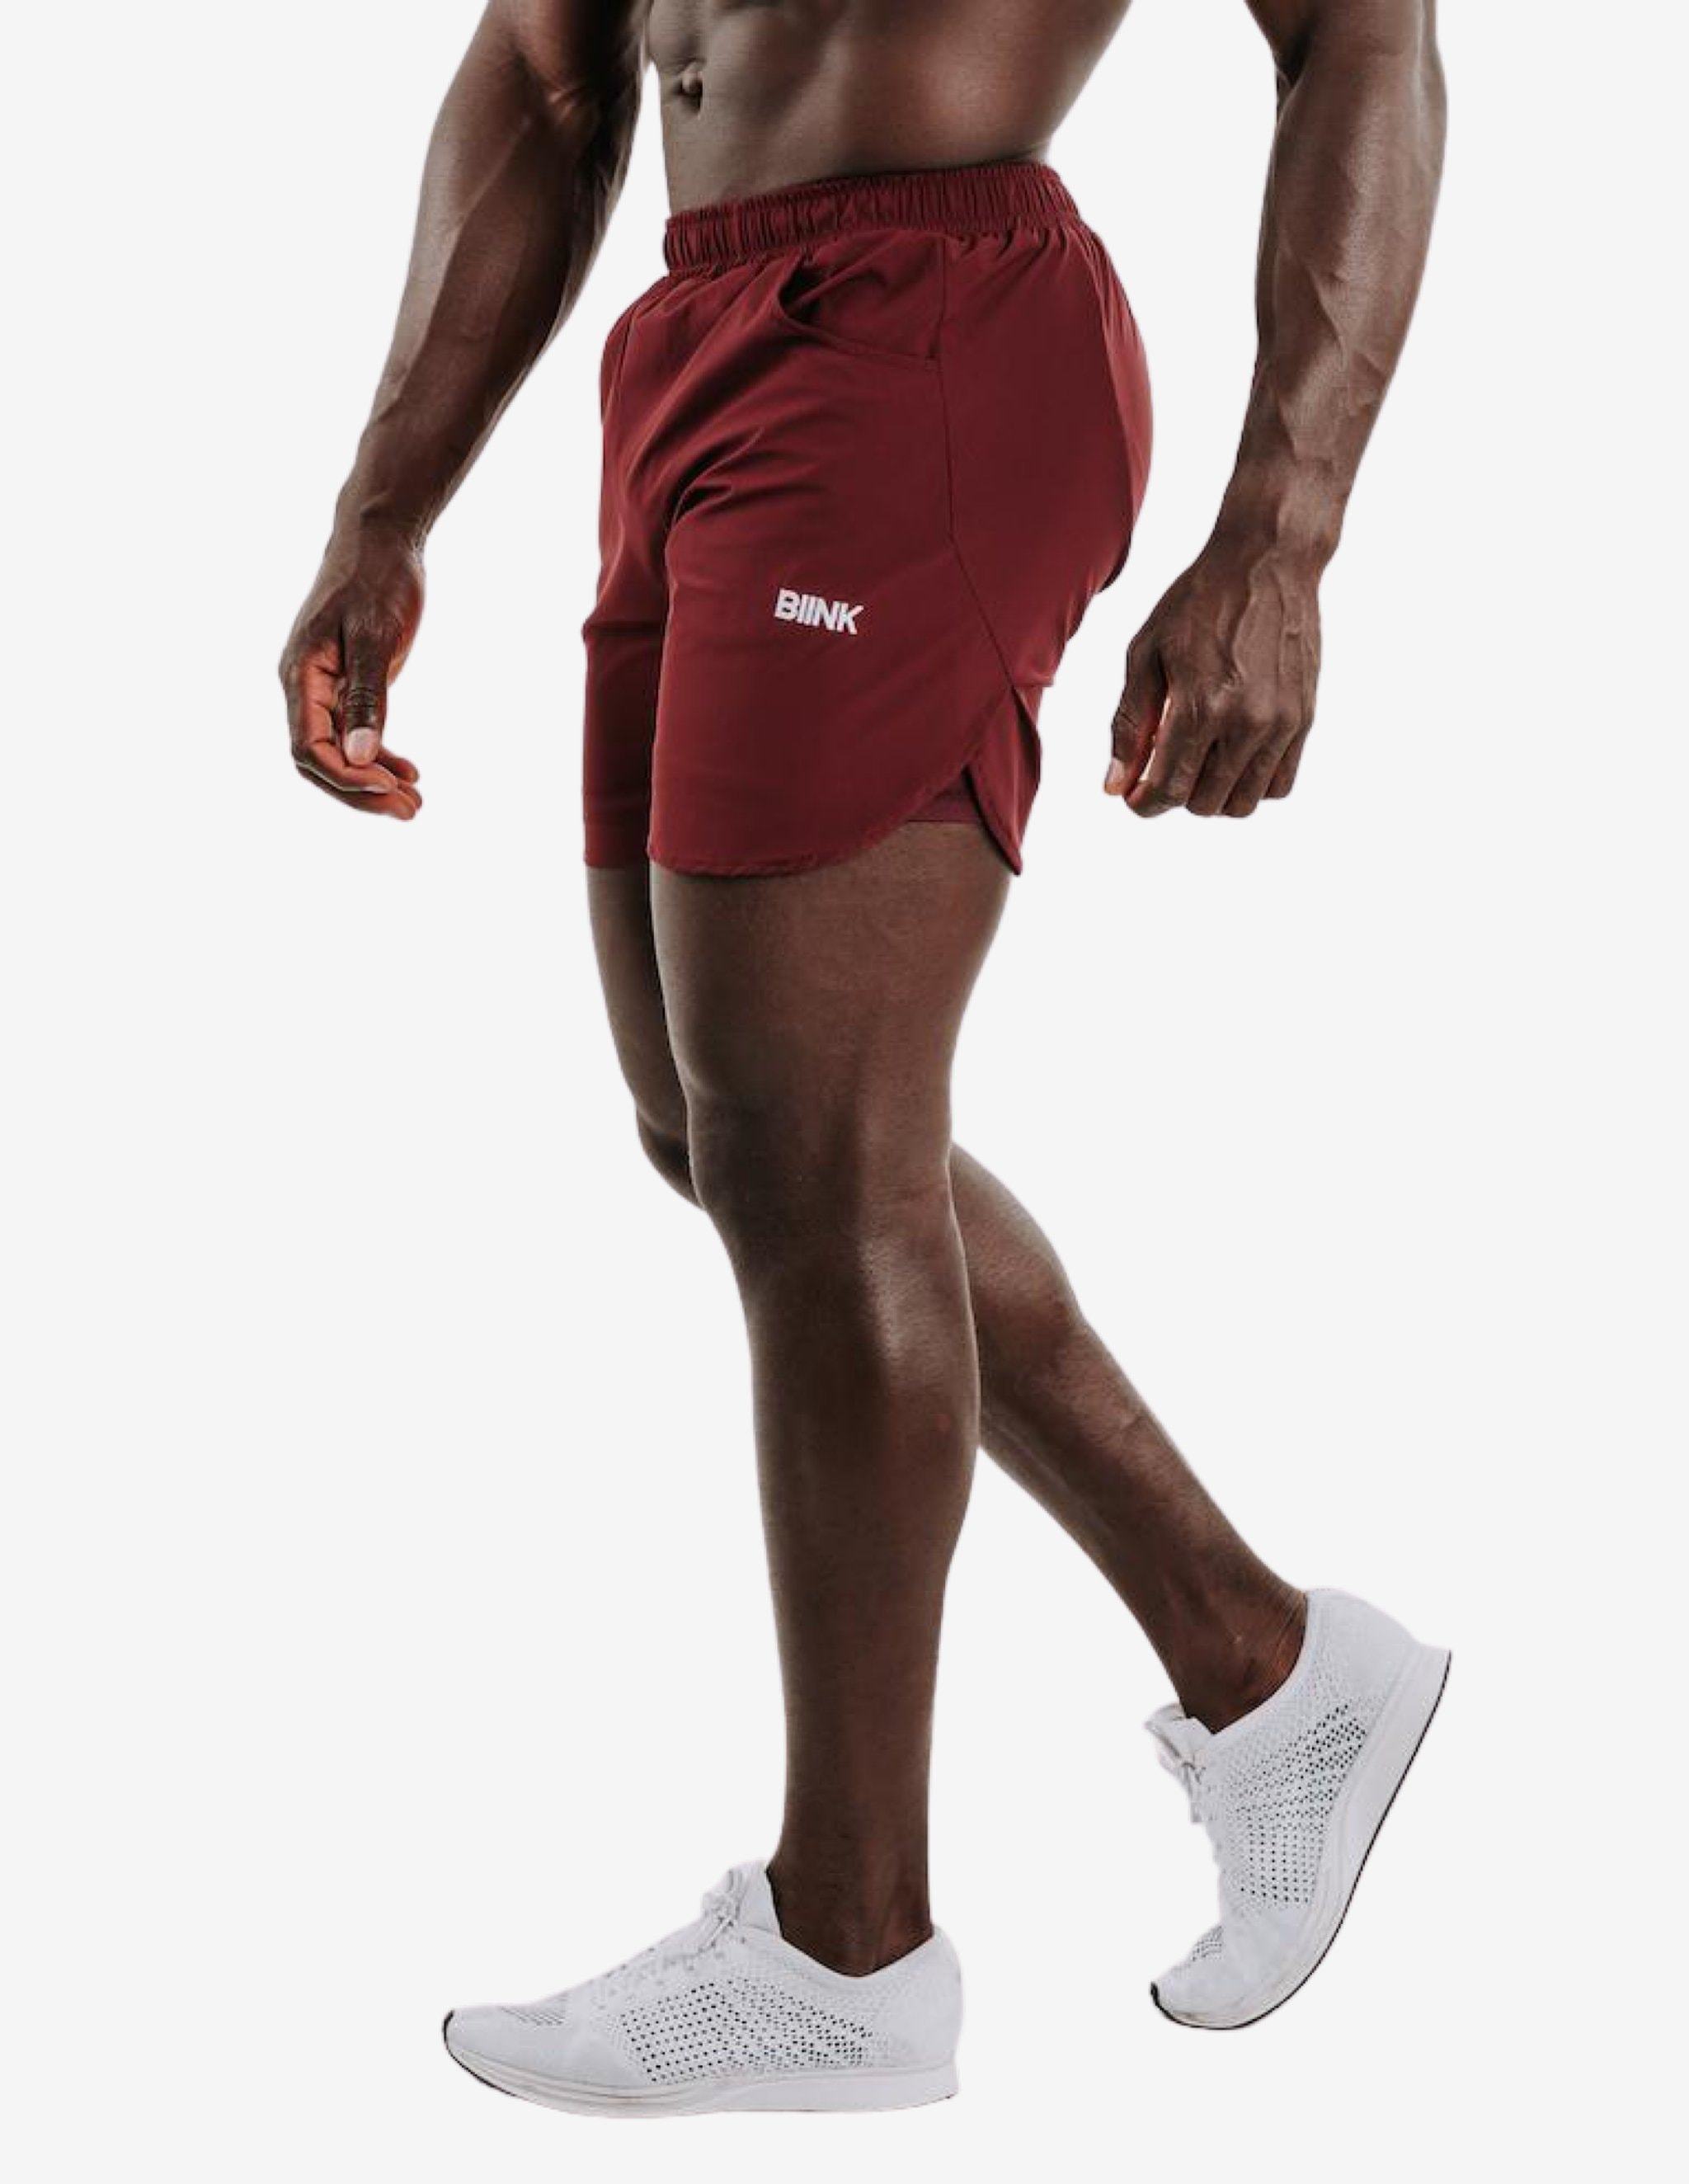 BIINKDRY 2-in-1 Training Shorts MK.II - Port-Shorts Man-Biink Athleisure-Guru Muscle